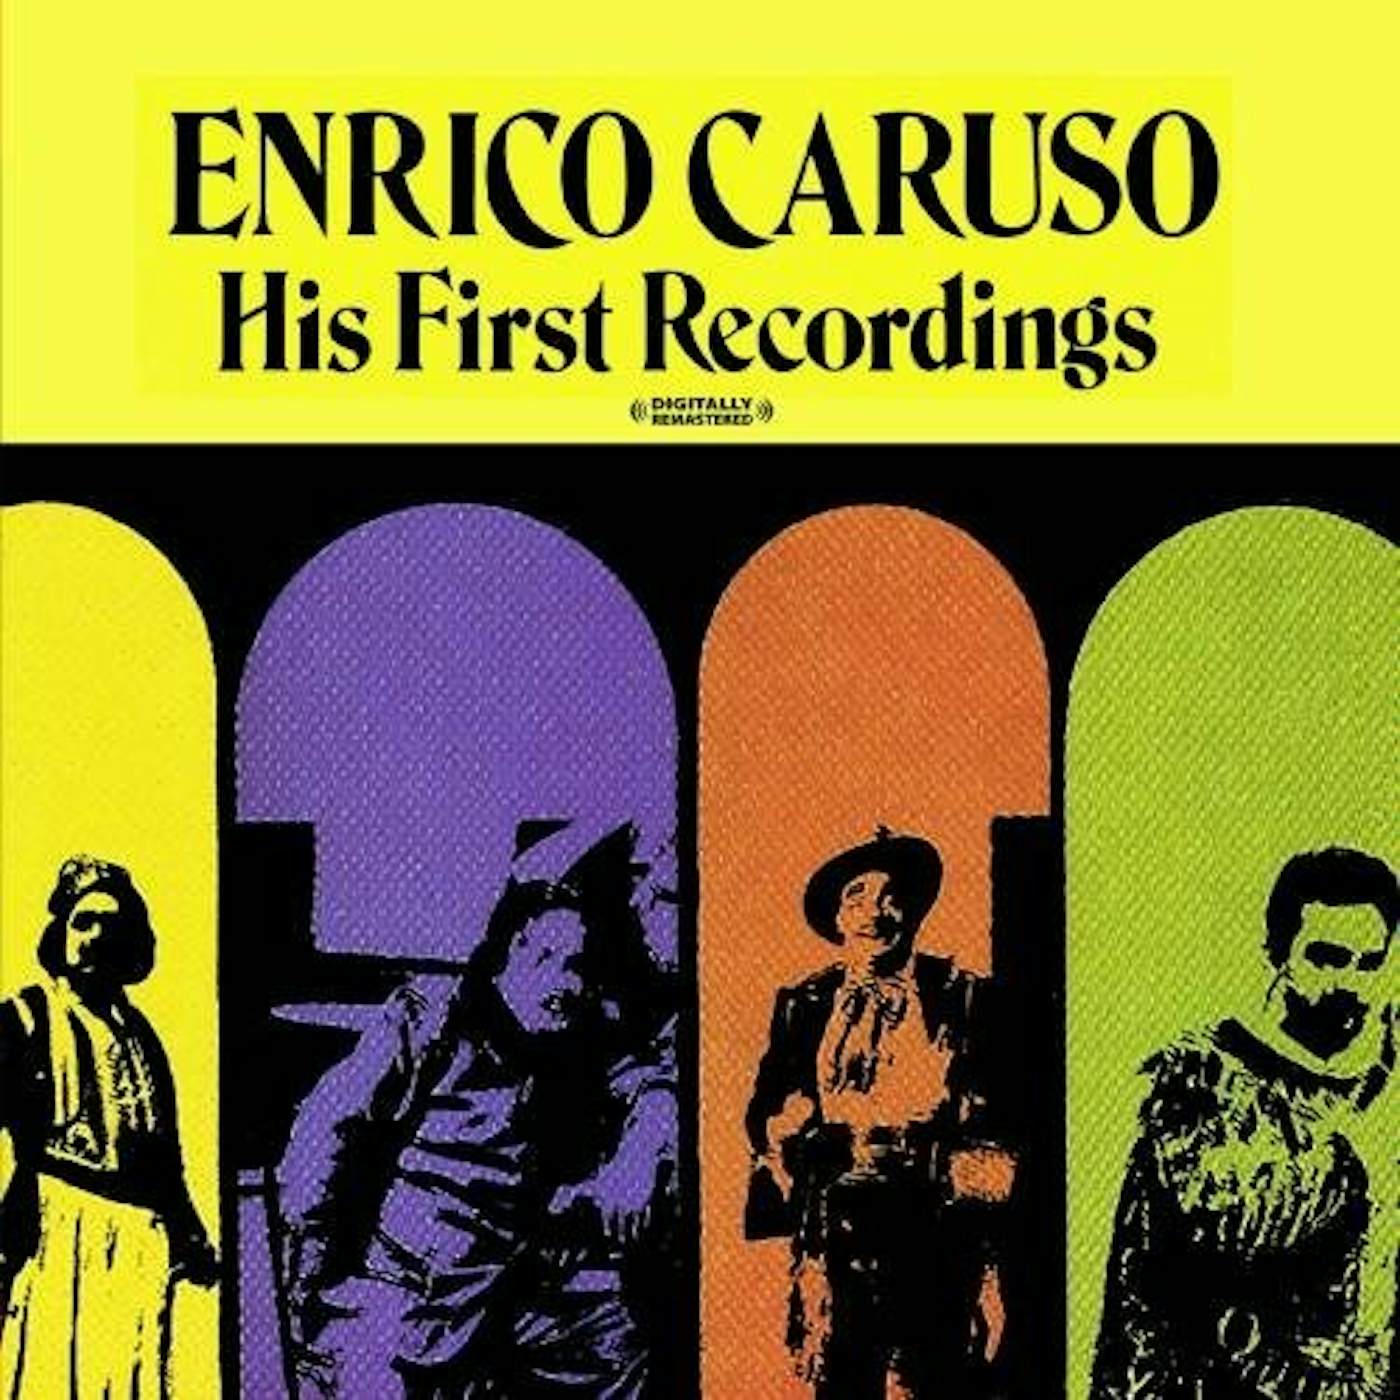 Enrico Caruso HIS FIRST RECORDINGS CD